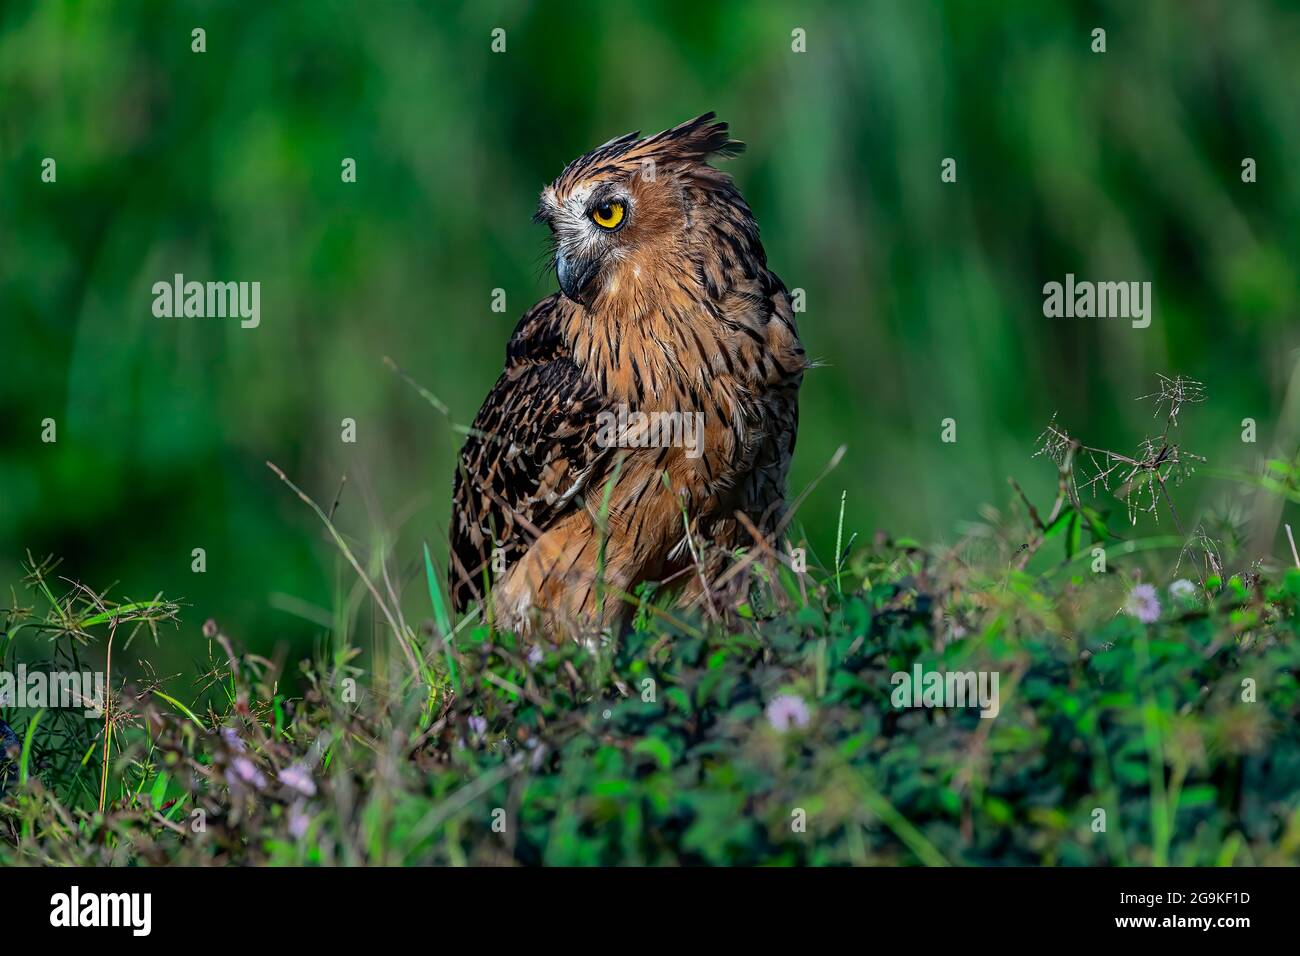 Barred Eagle-Owl or Bubo Sumatranus (scientific name) is enjoying morning sunshine at  green savanna with weeds bokeh background. Stock Photo